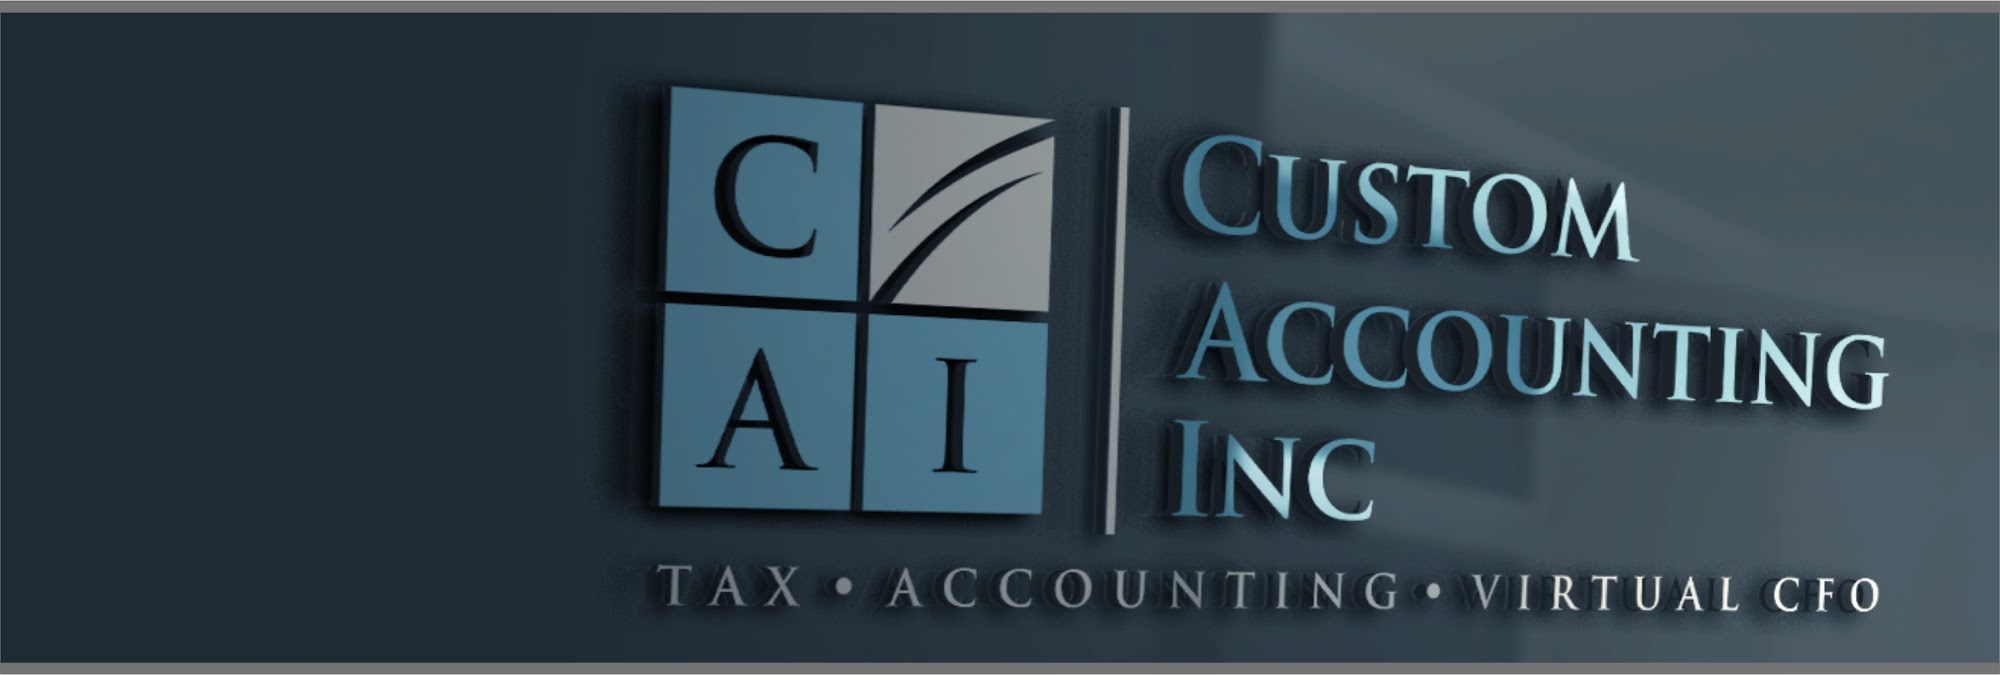 Custom Accounting, Inc